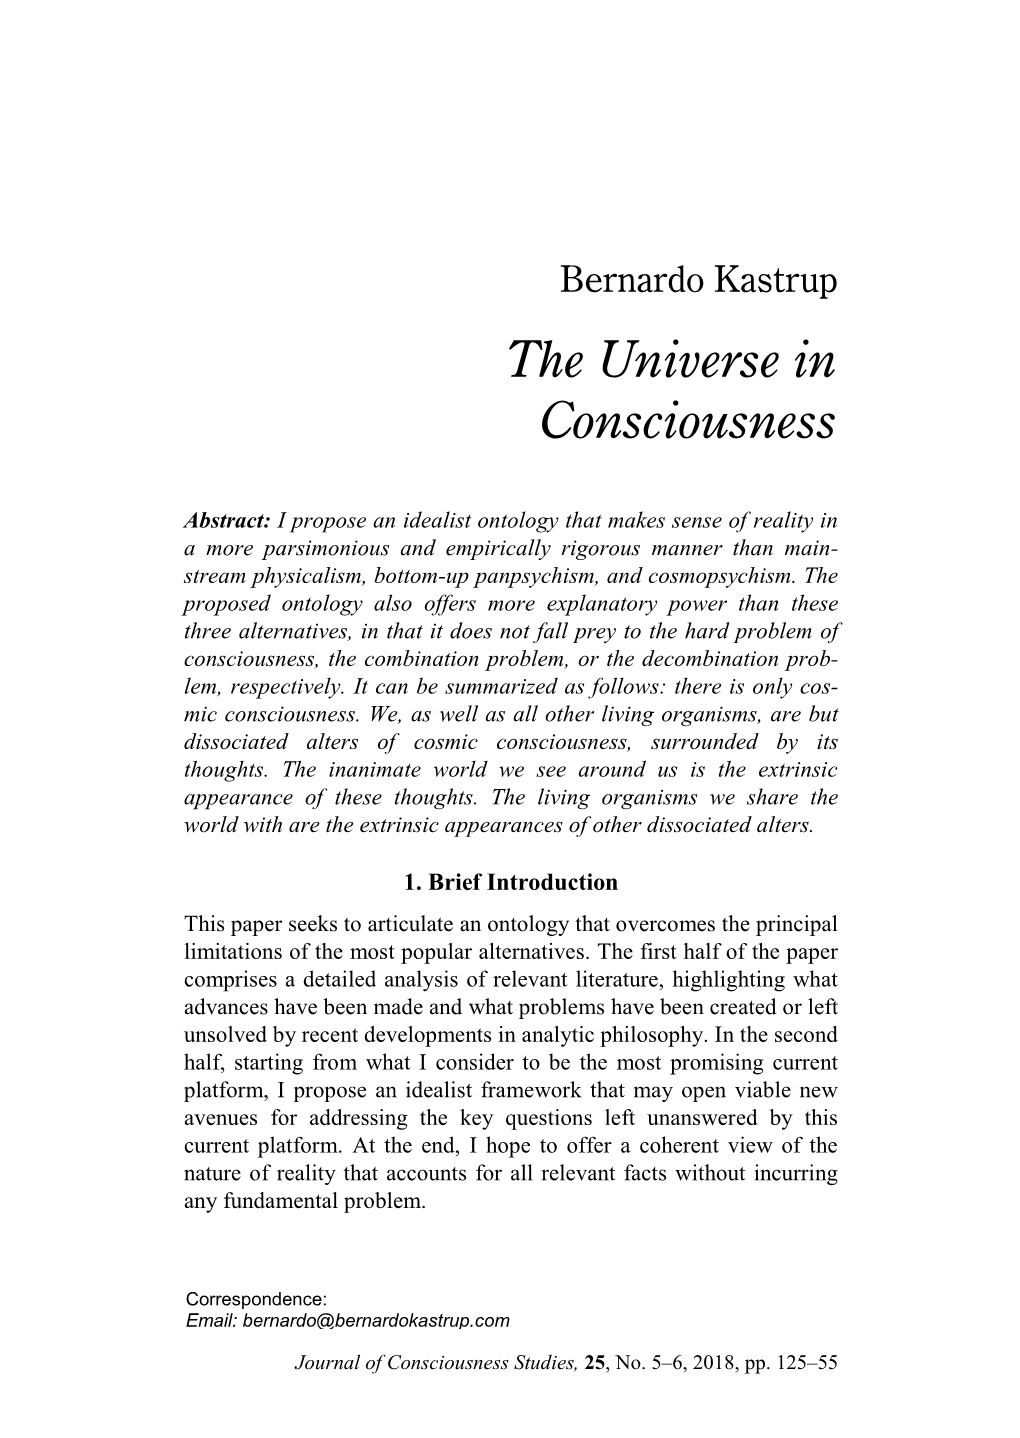 Bernardo Kastrup the Universe in Consciousness